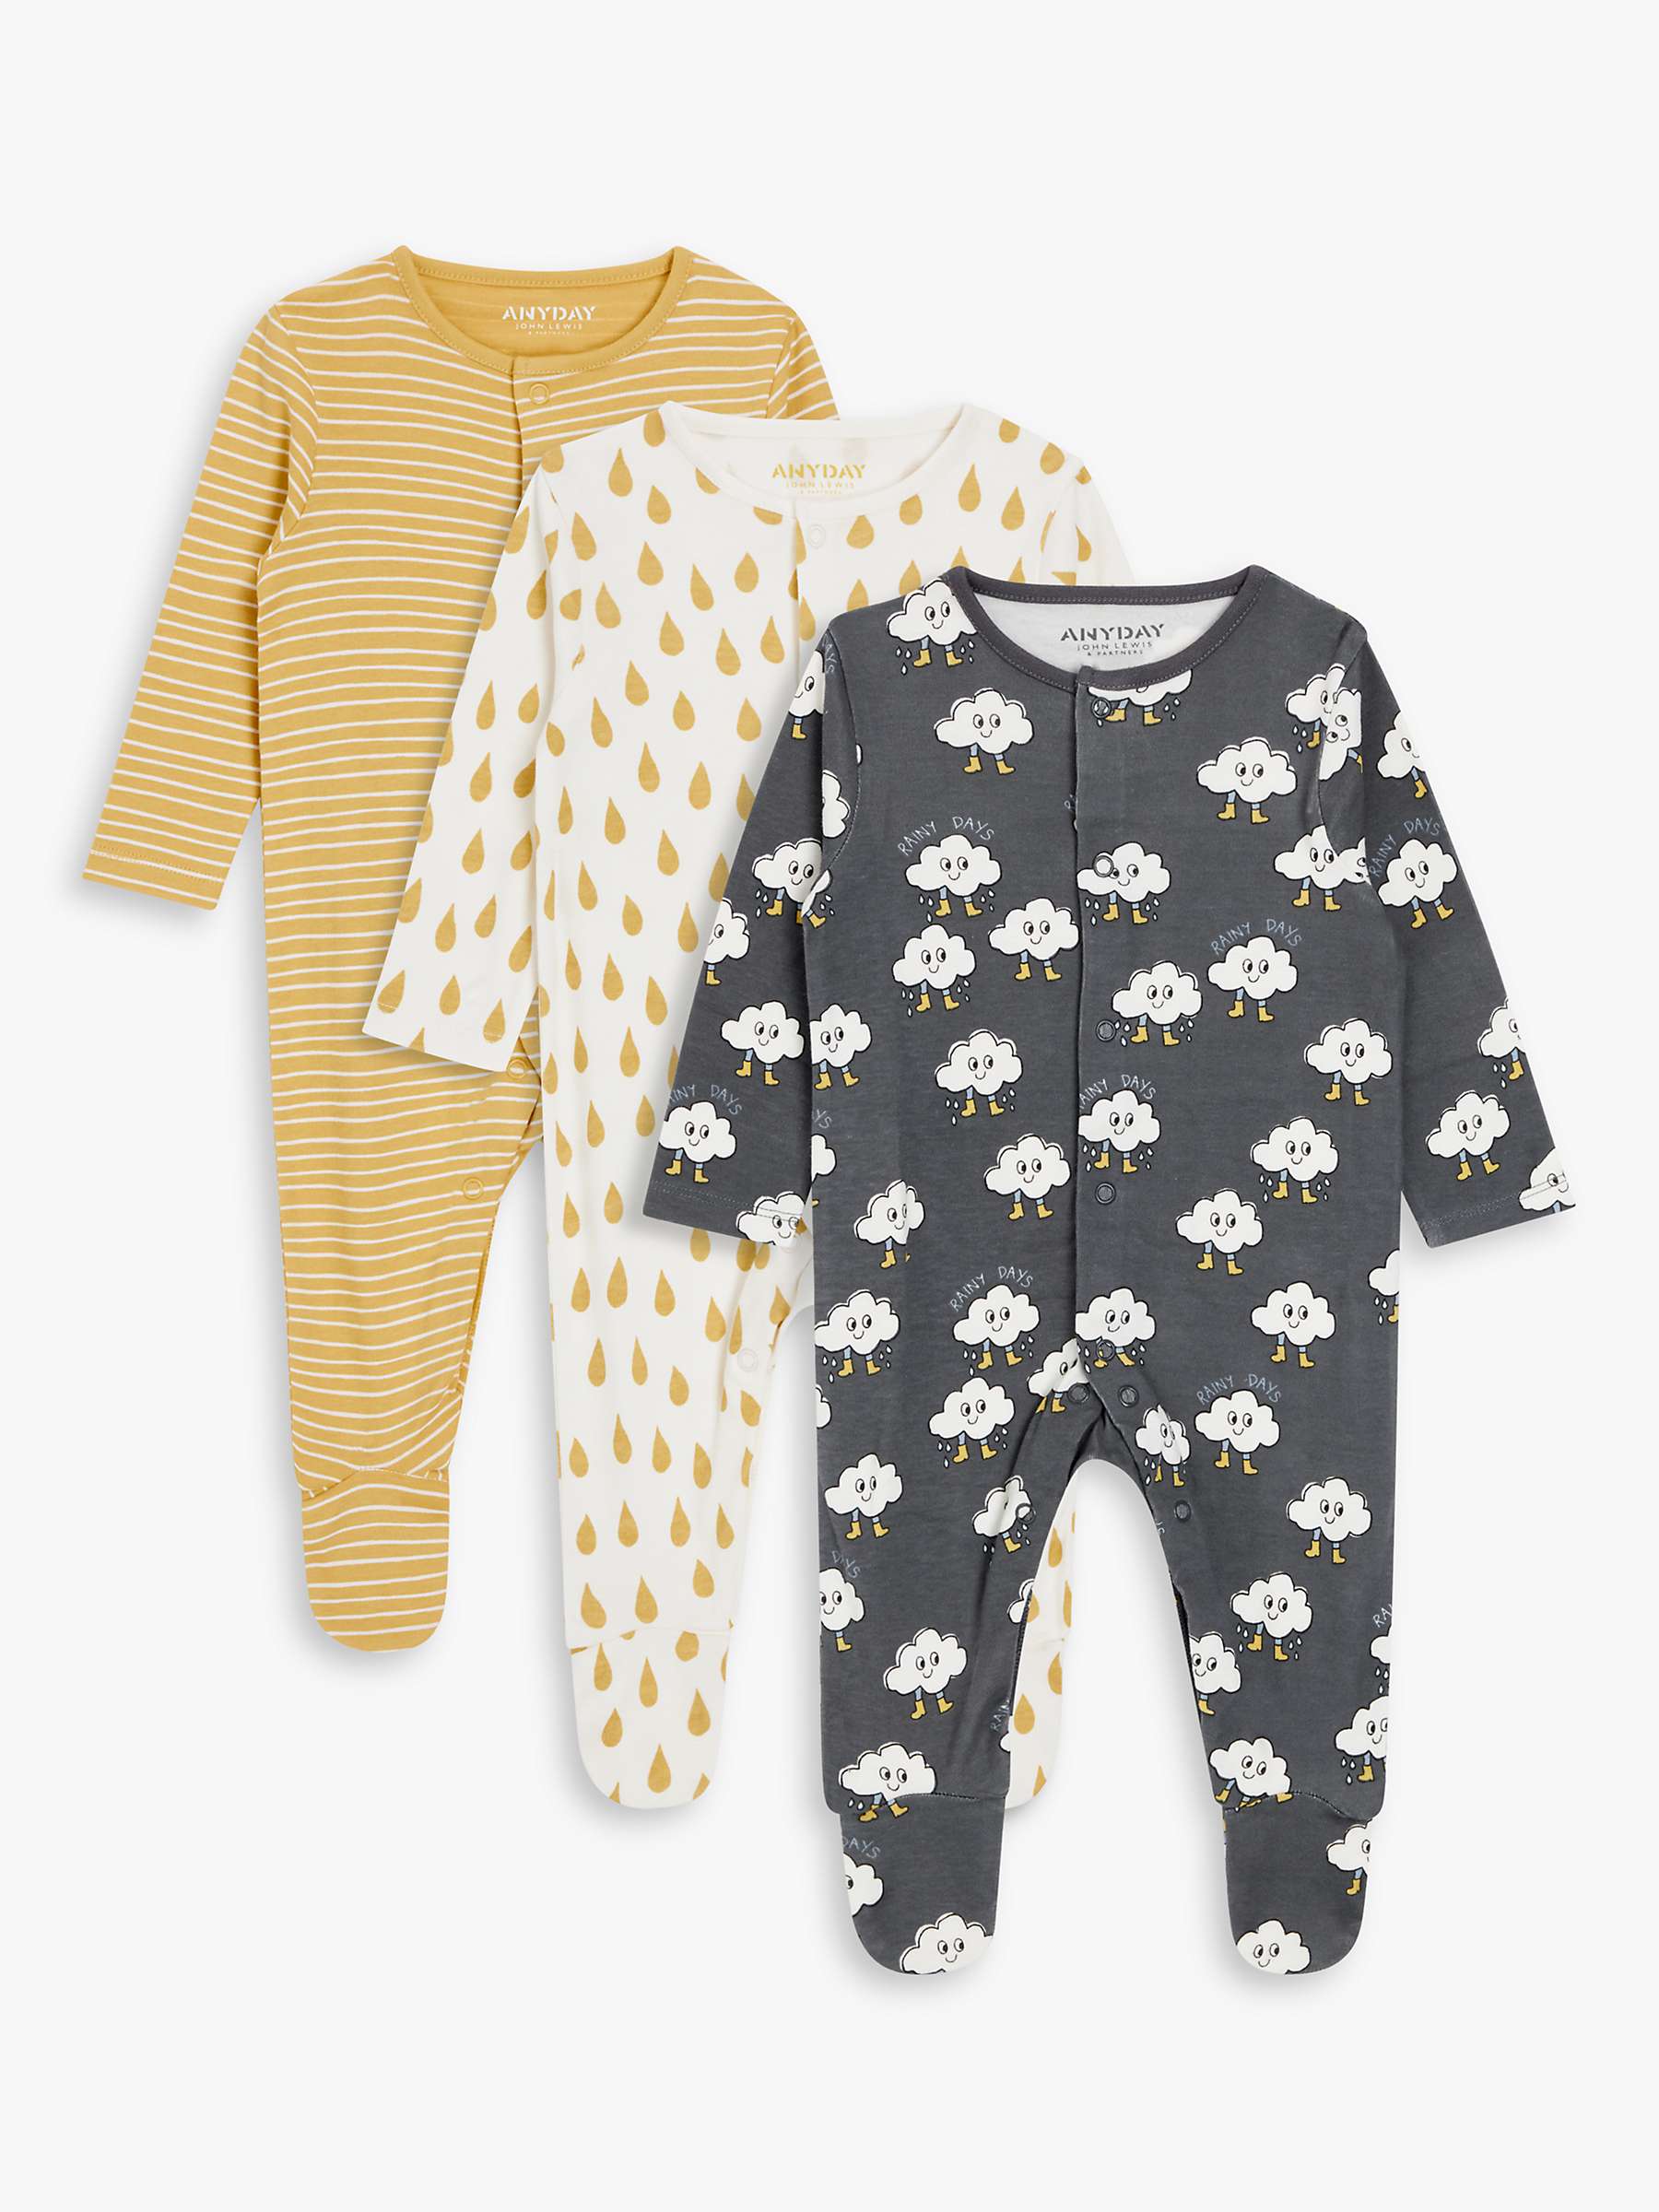 Buy John Lewis ANYDAY Baby Weather Print Sleepsuit, Pack of 3, Multi Online at johnlewis.com